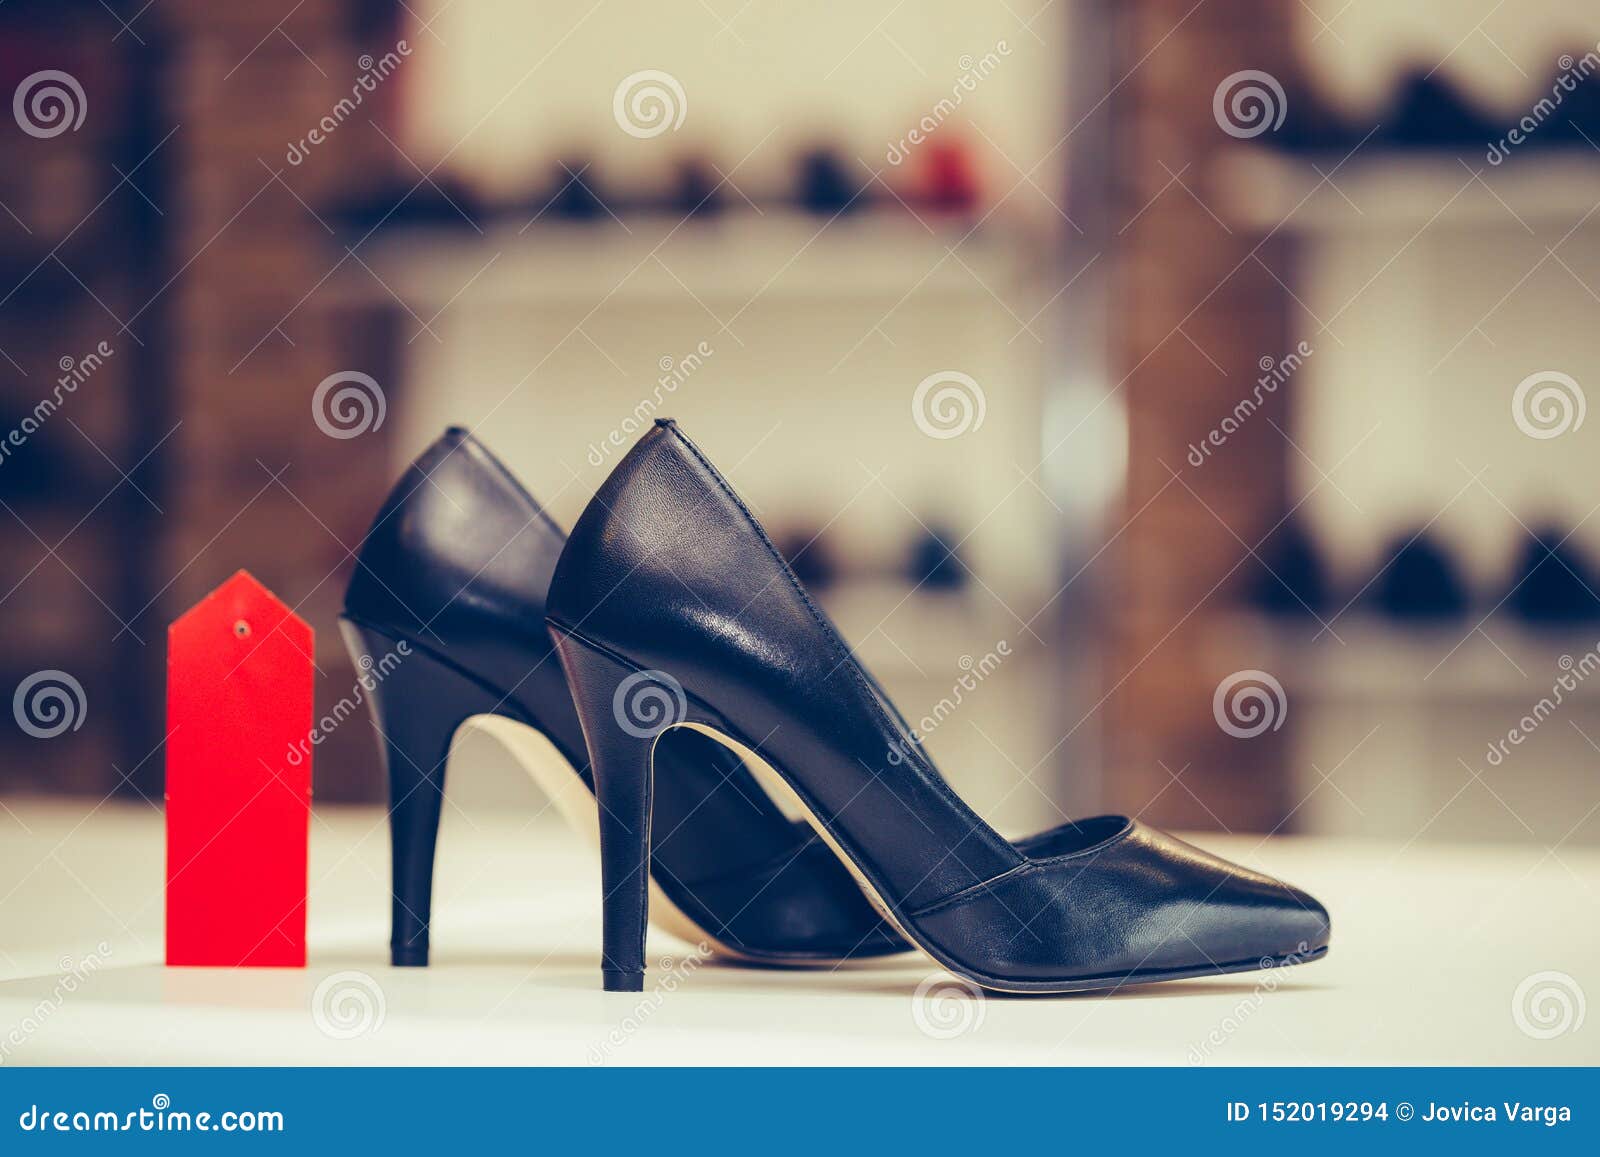 Red elegant high heel women shoes Stock Photo by ©varga.jovica@hotmail.com  279080554